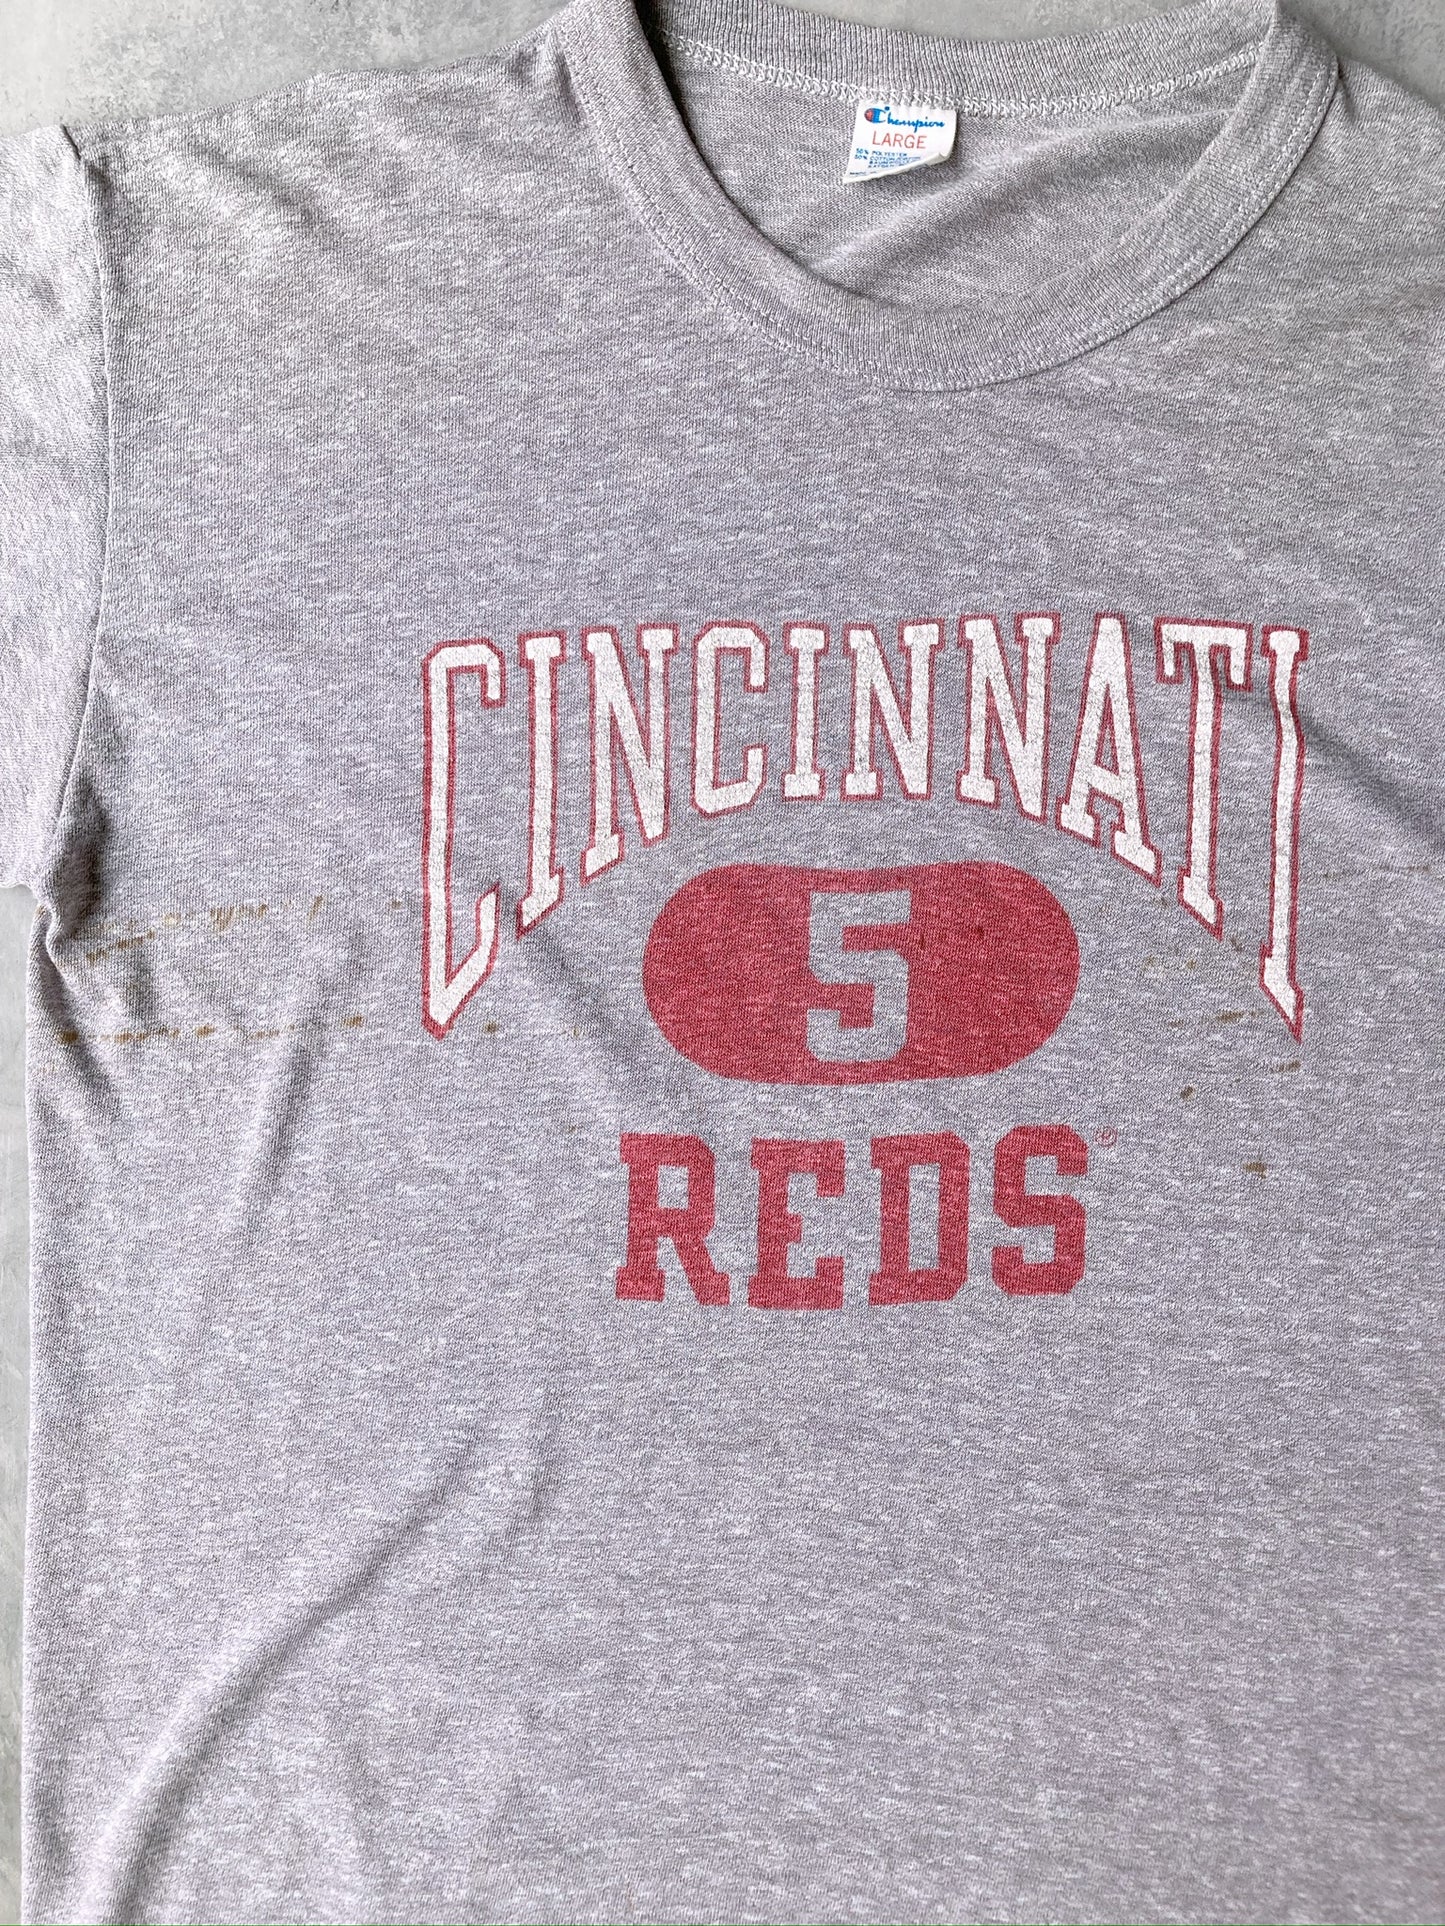 Cincinnati Reds T-Shirt 80's - Large